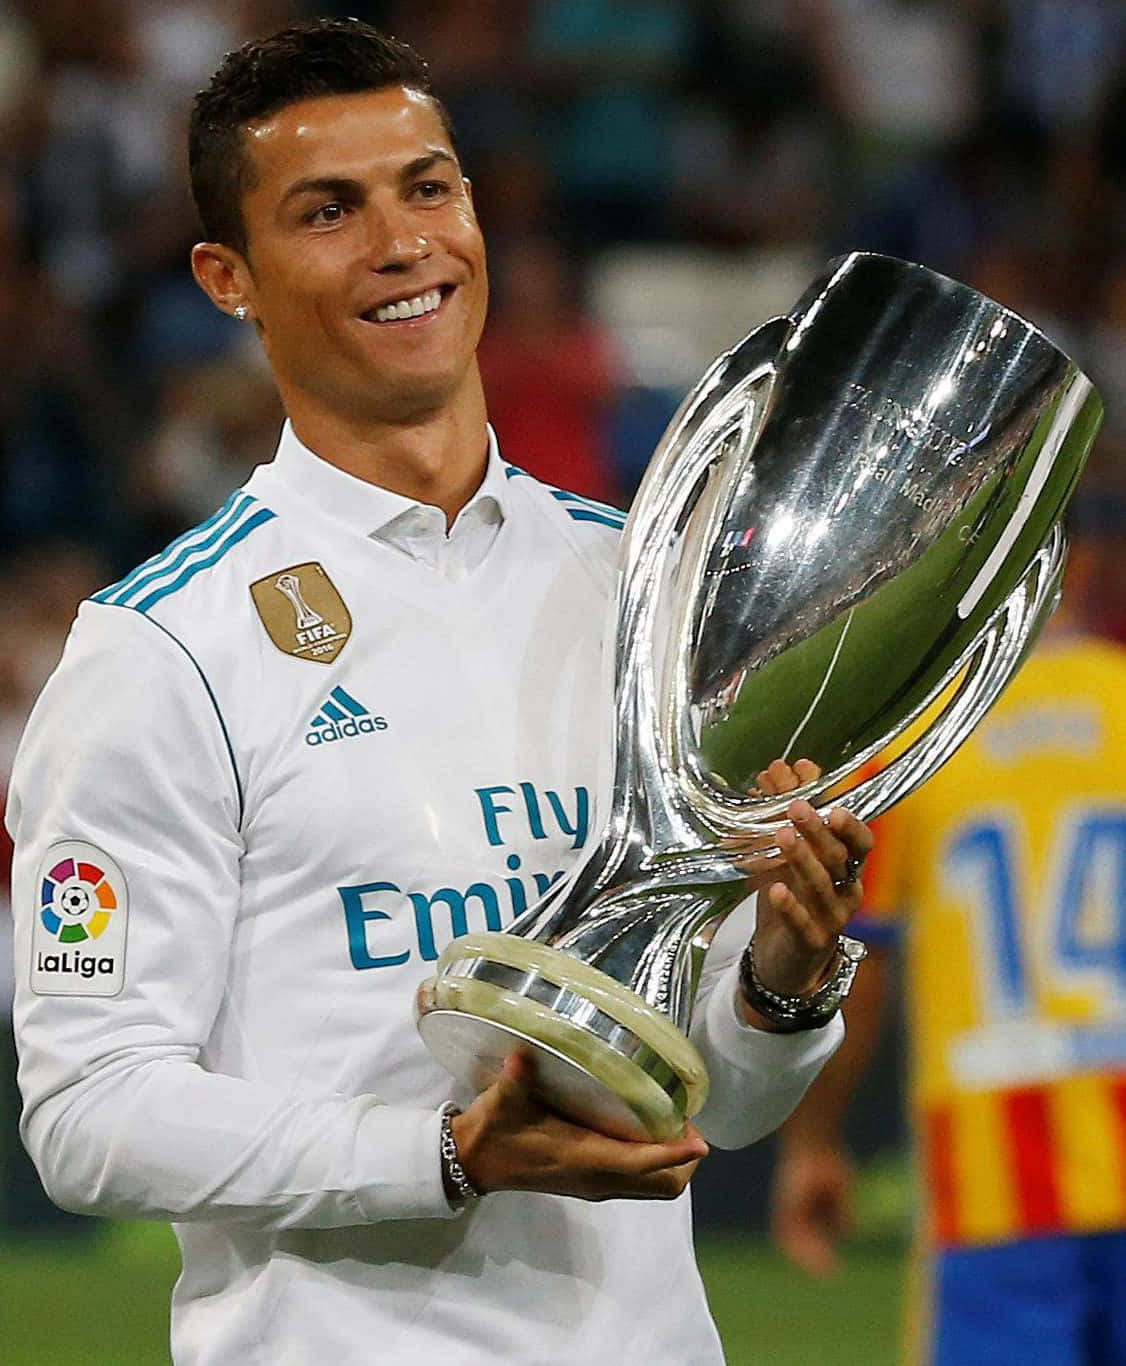 Football legend Cristiano Ronaldo striking a fierce pose on the field